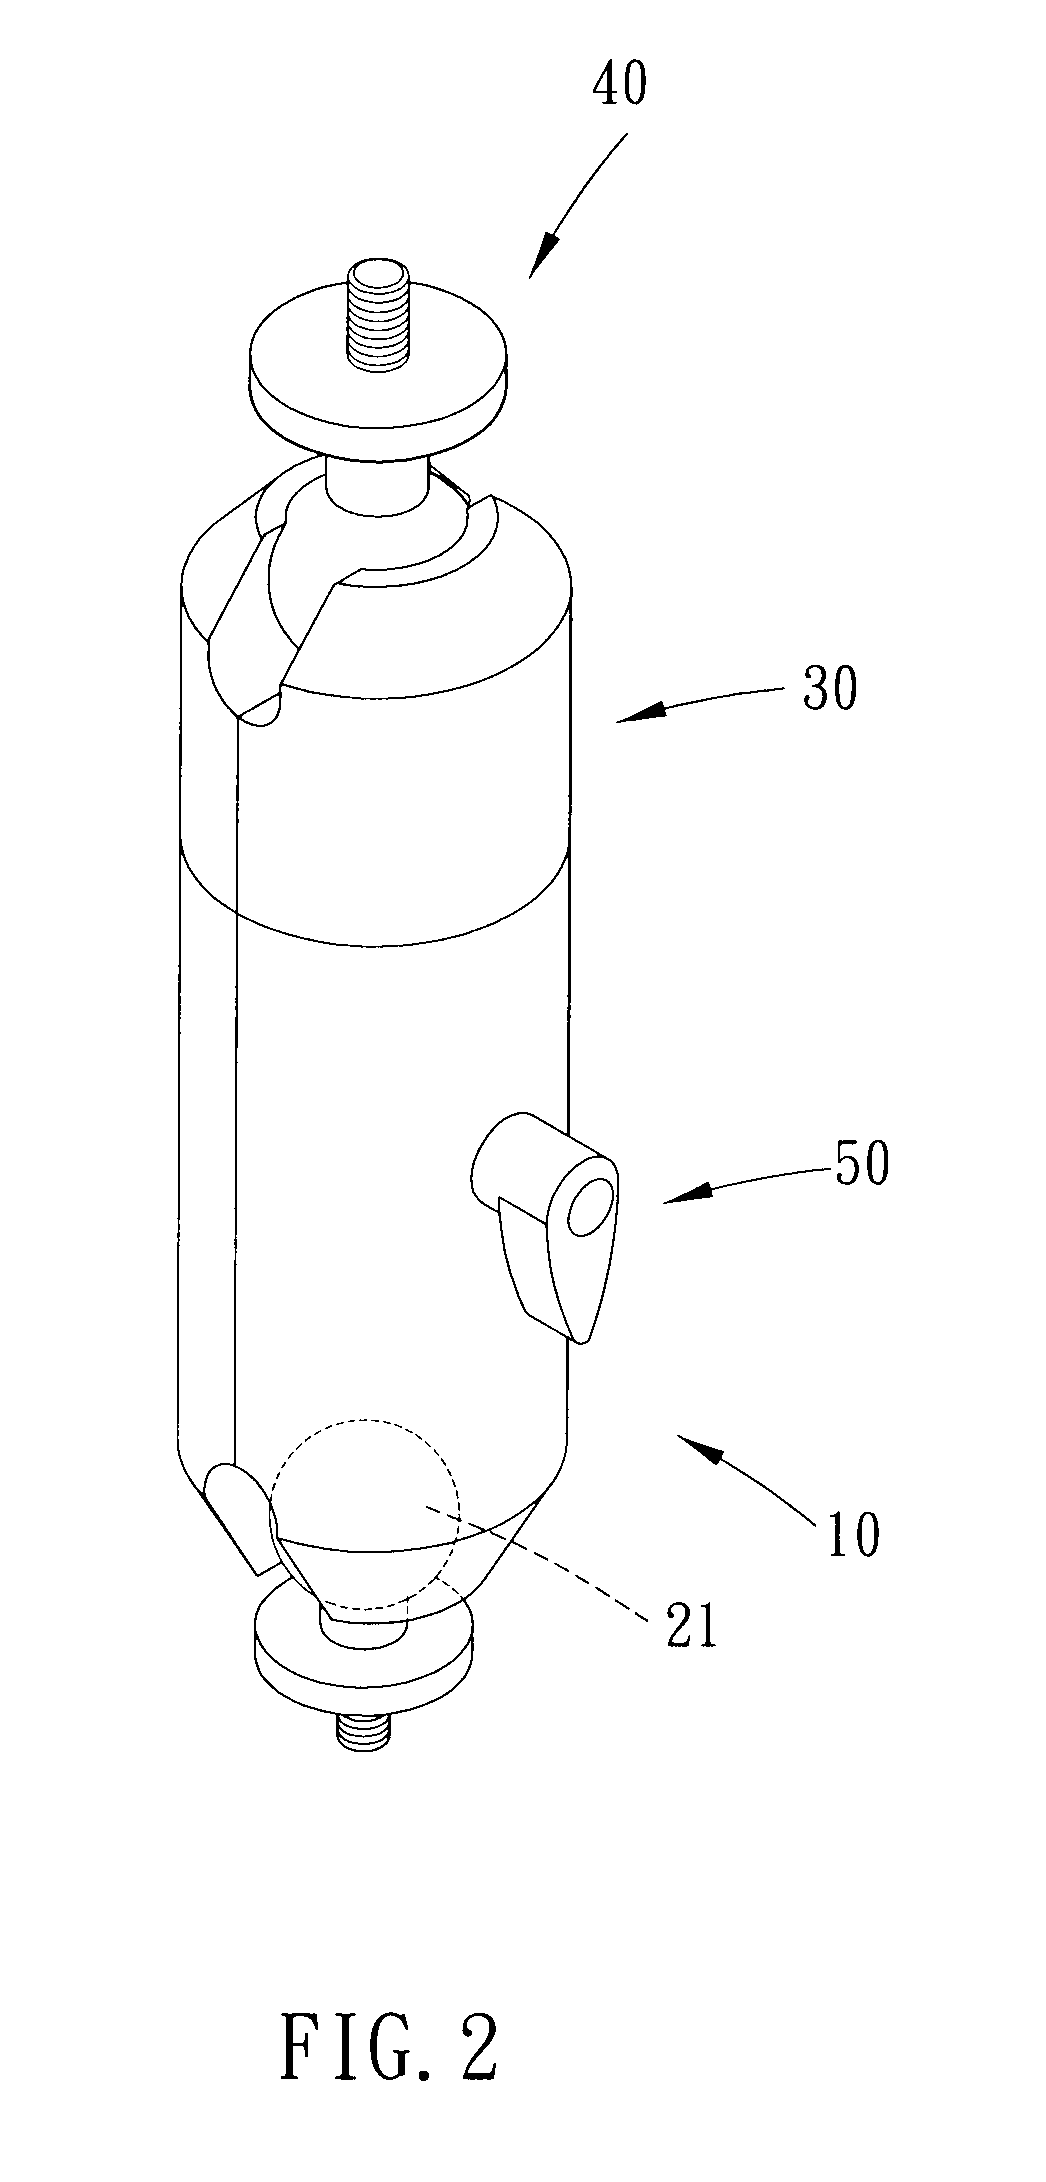 Universal fastening apparatus